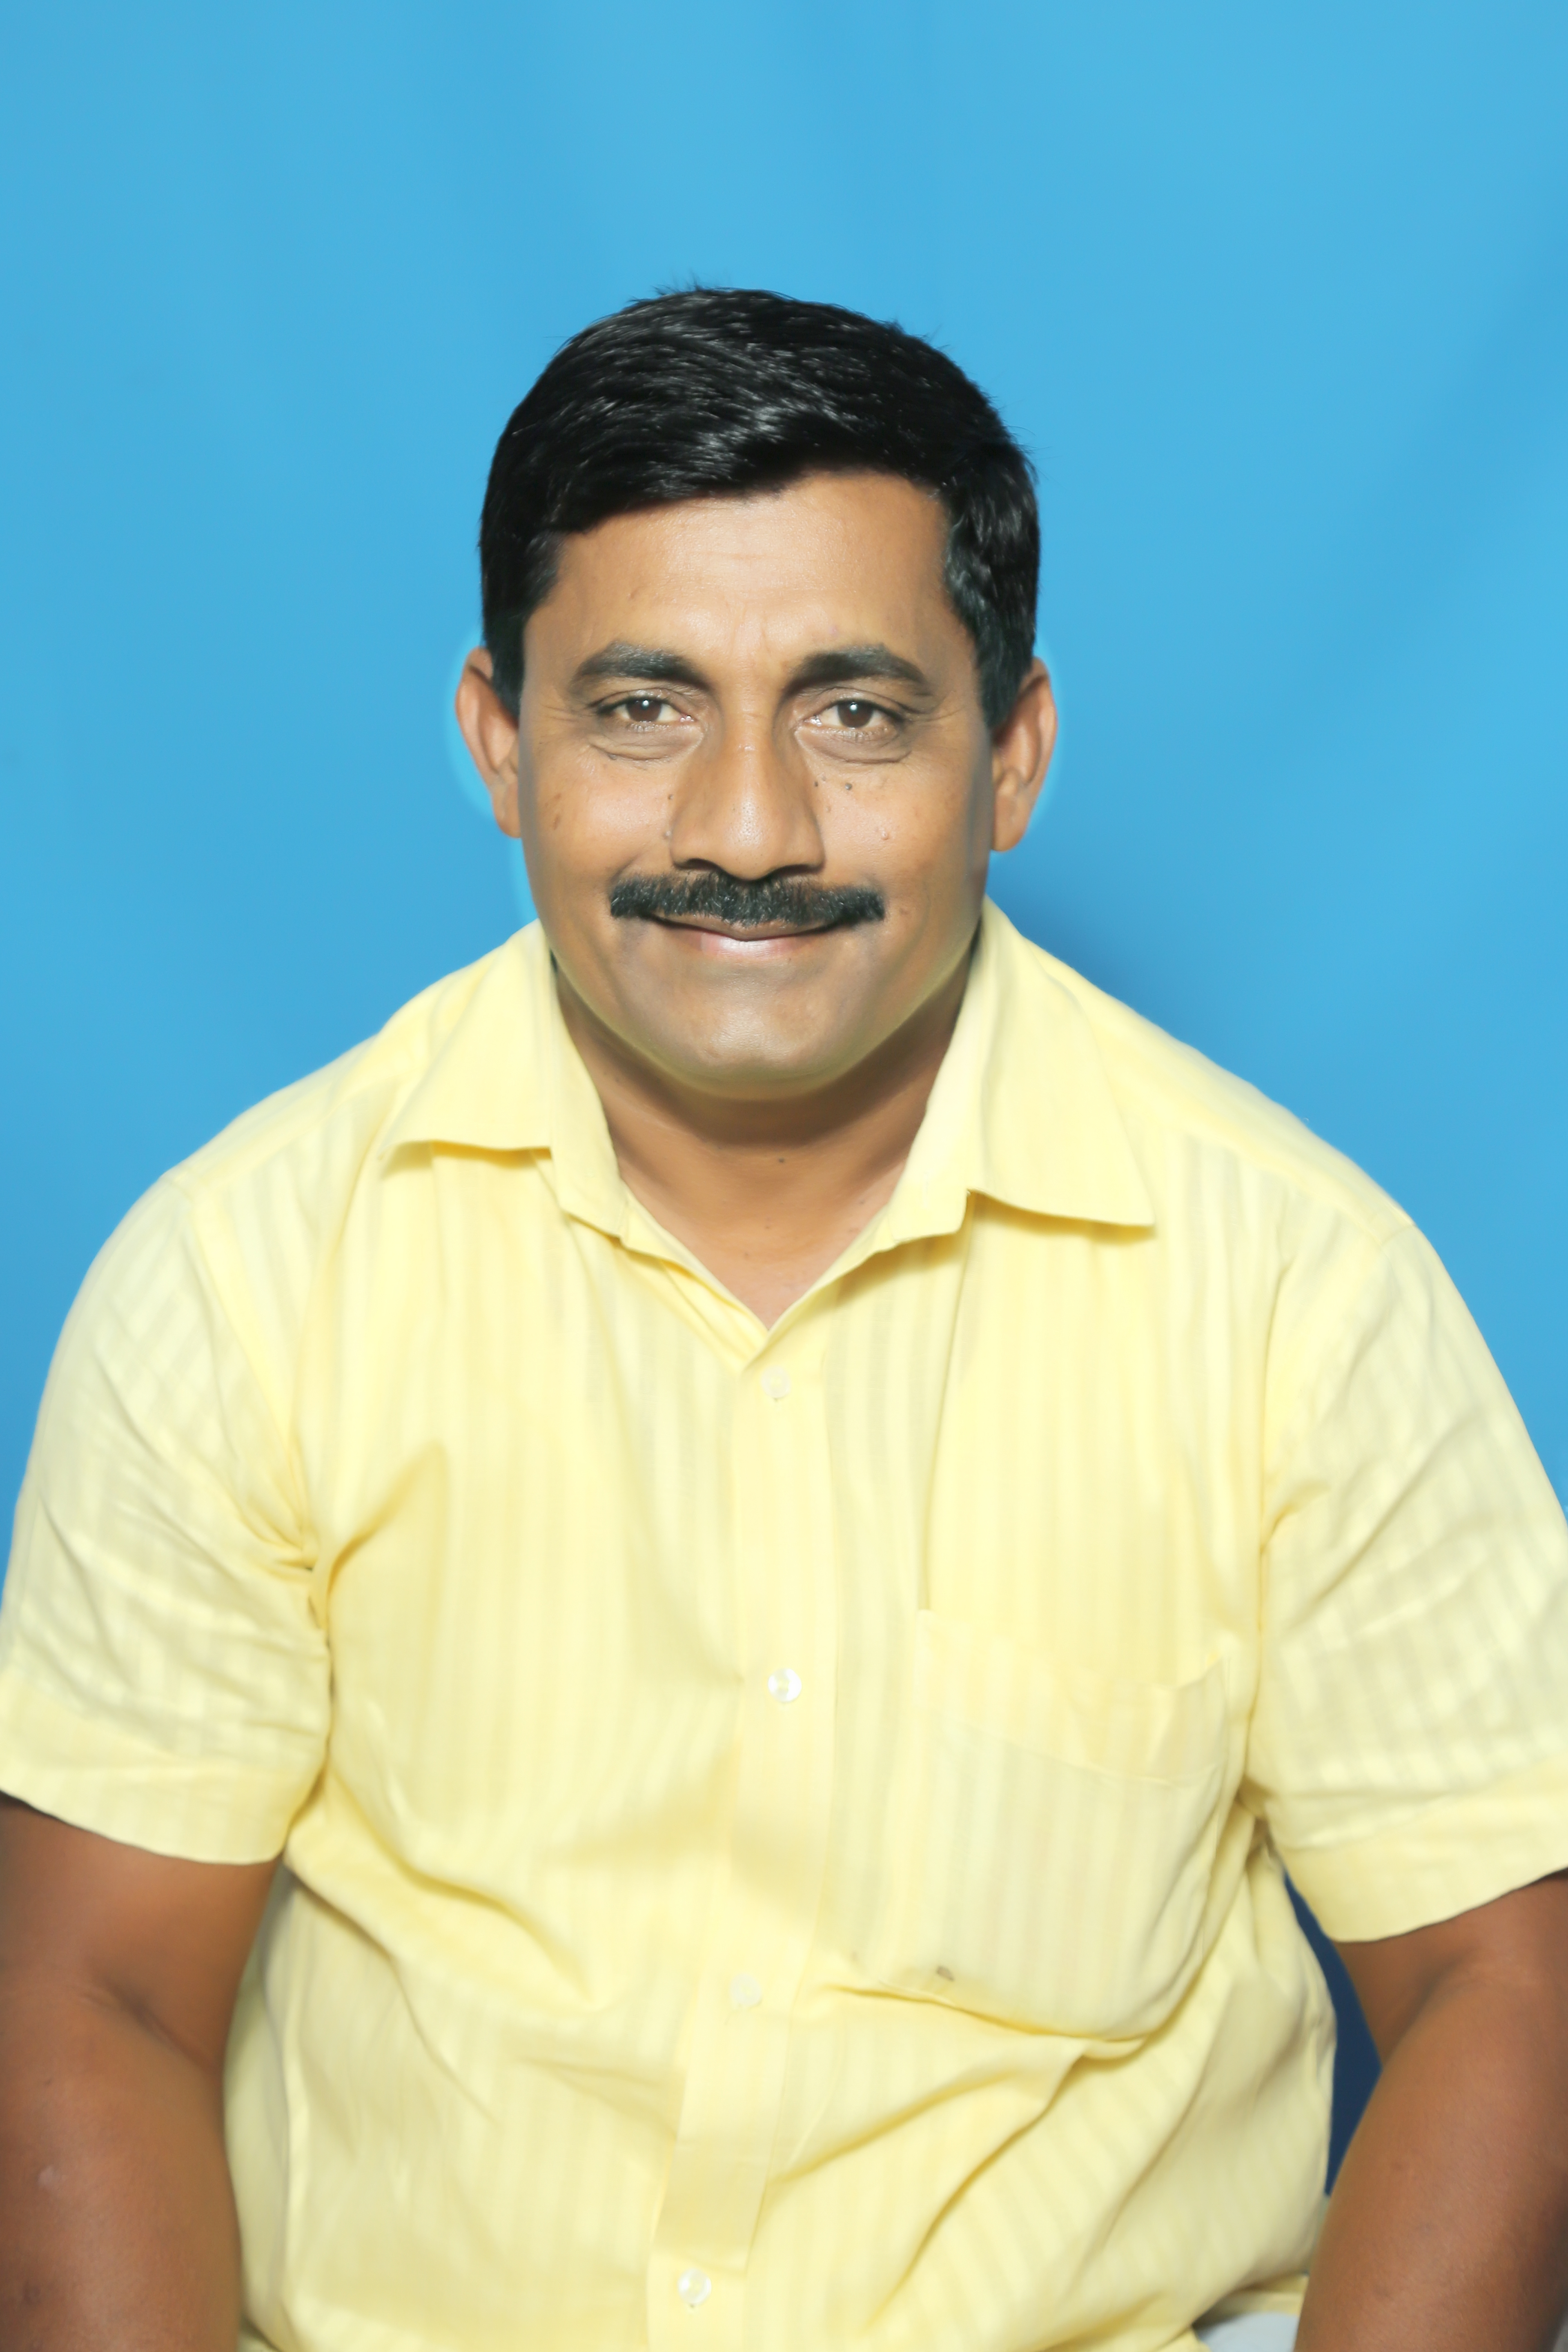 Mr. Anil Shivaji Pawar